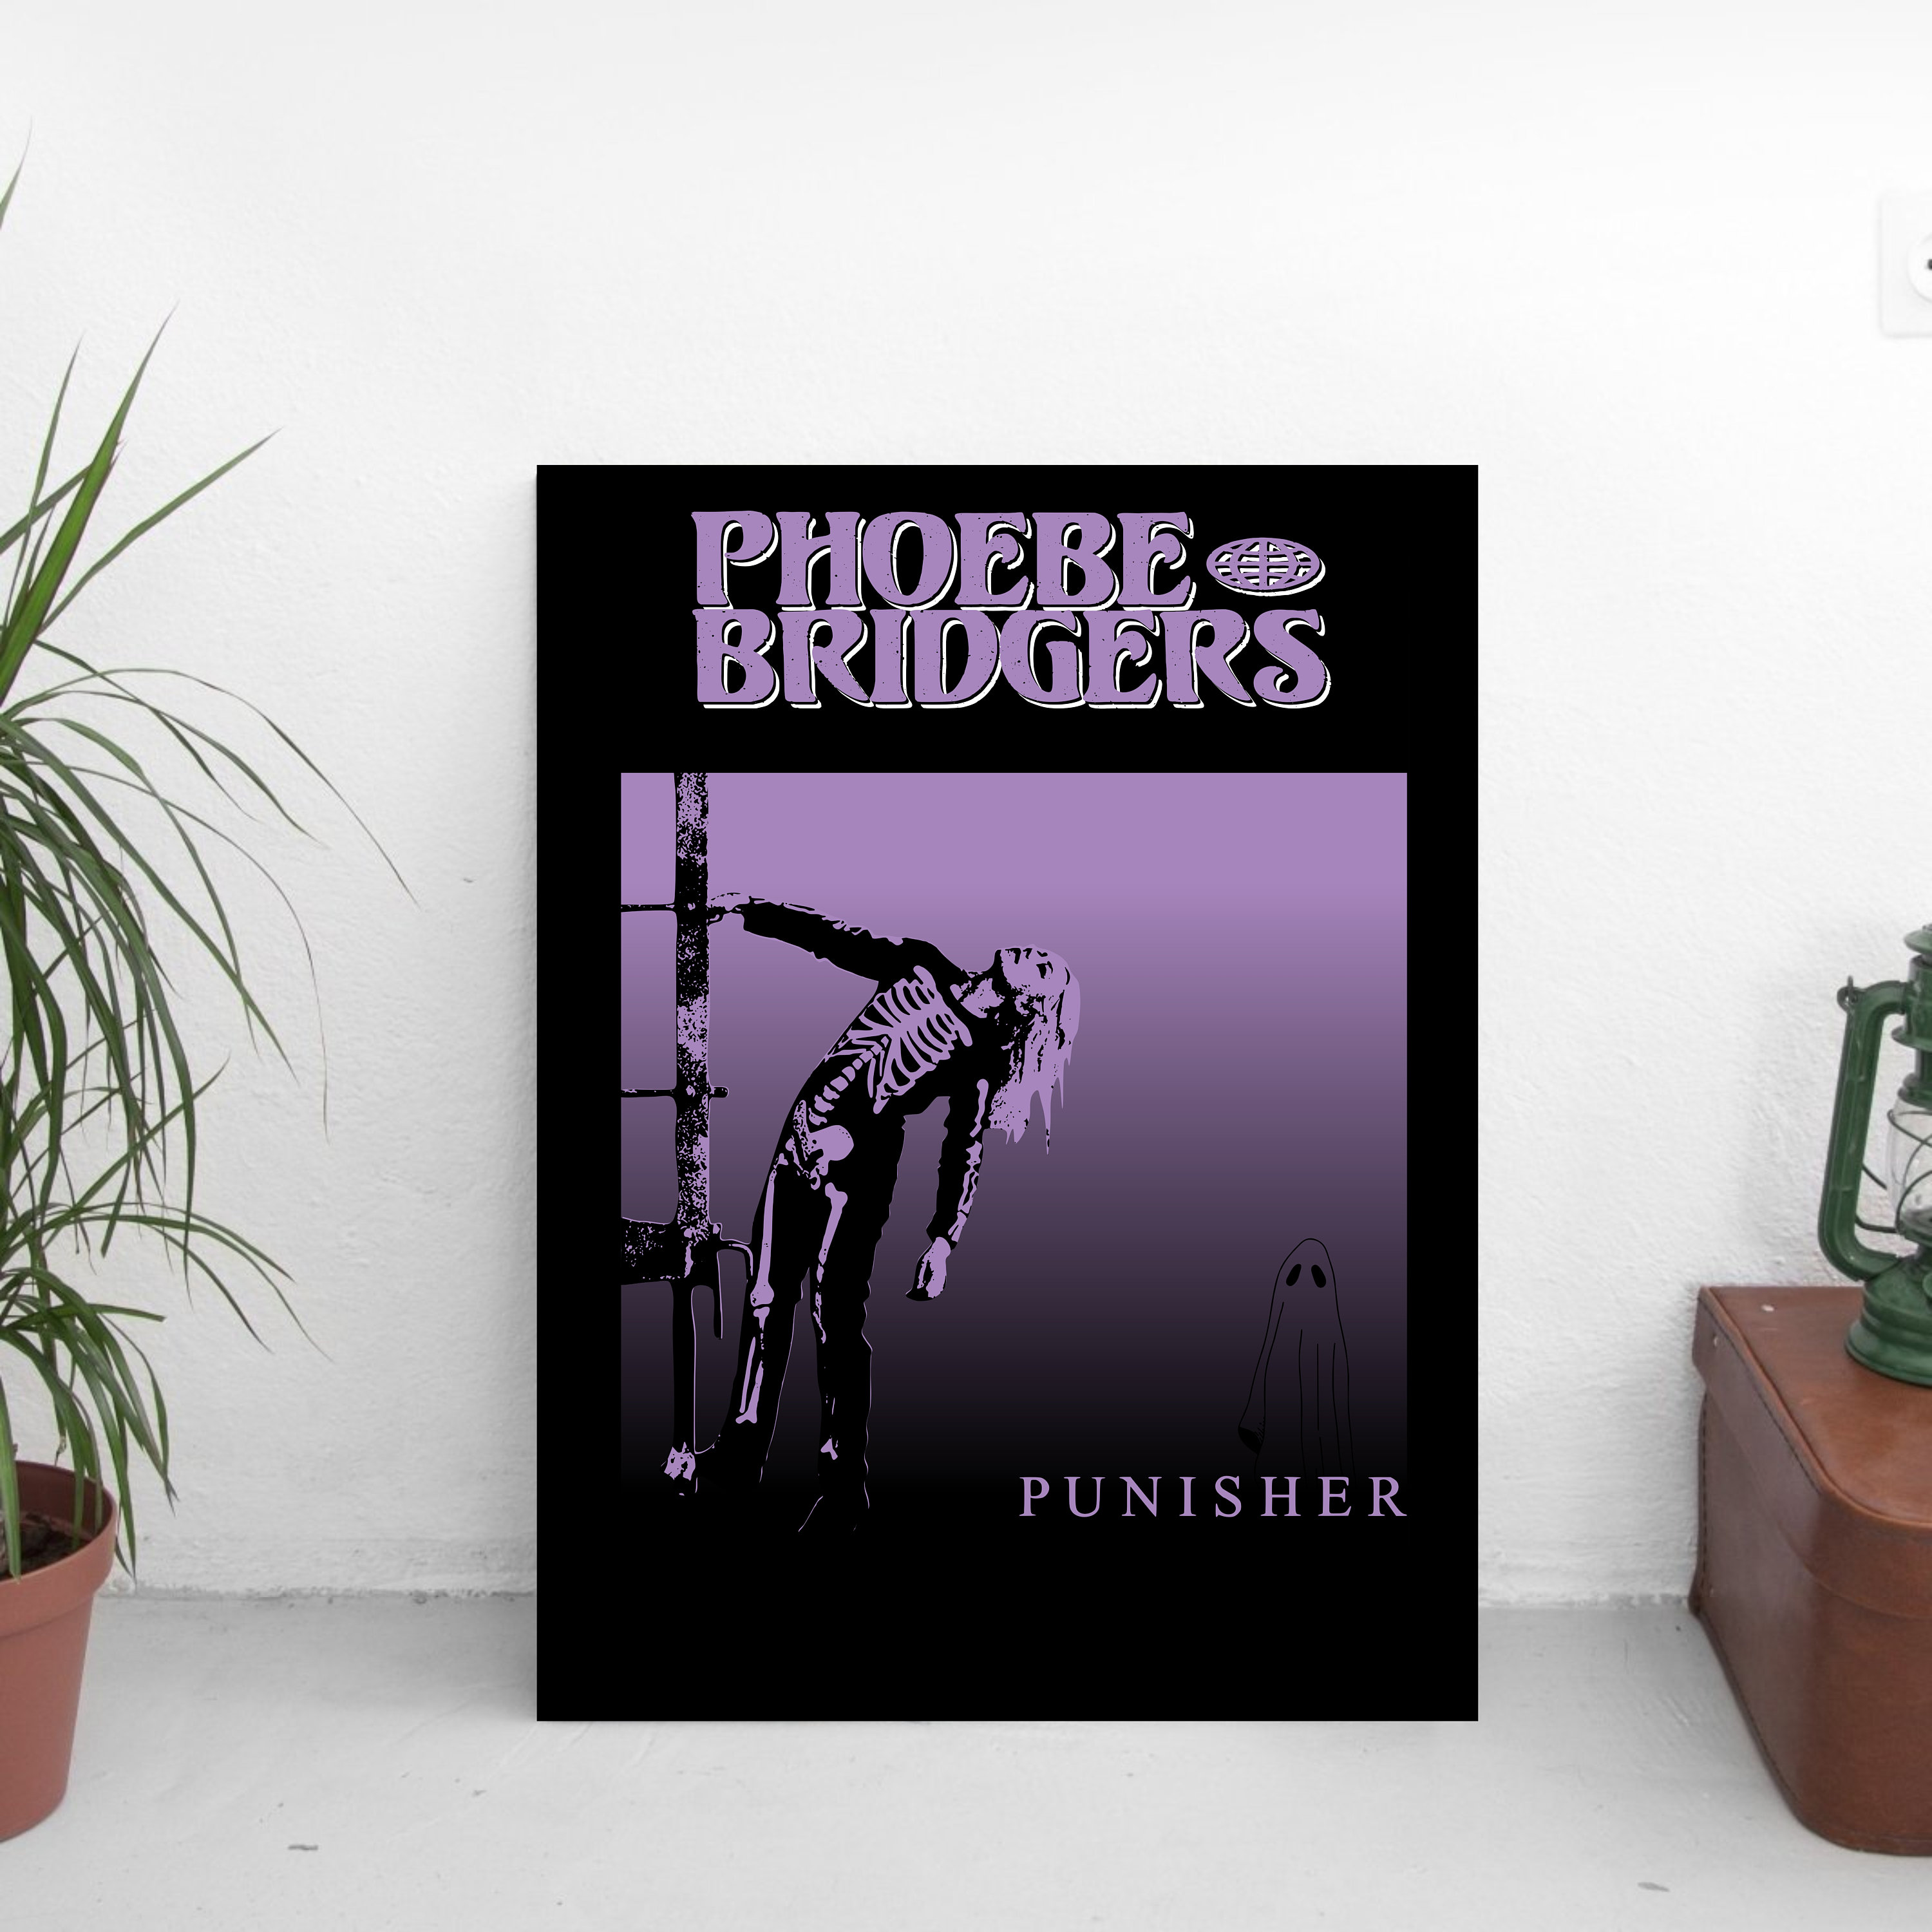 Phoebe Bridgers' 'Punisher' Receives Rave Reviews